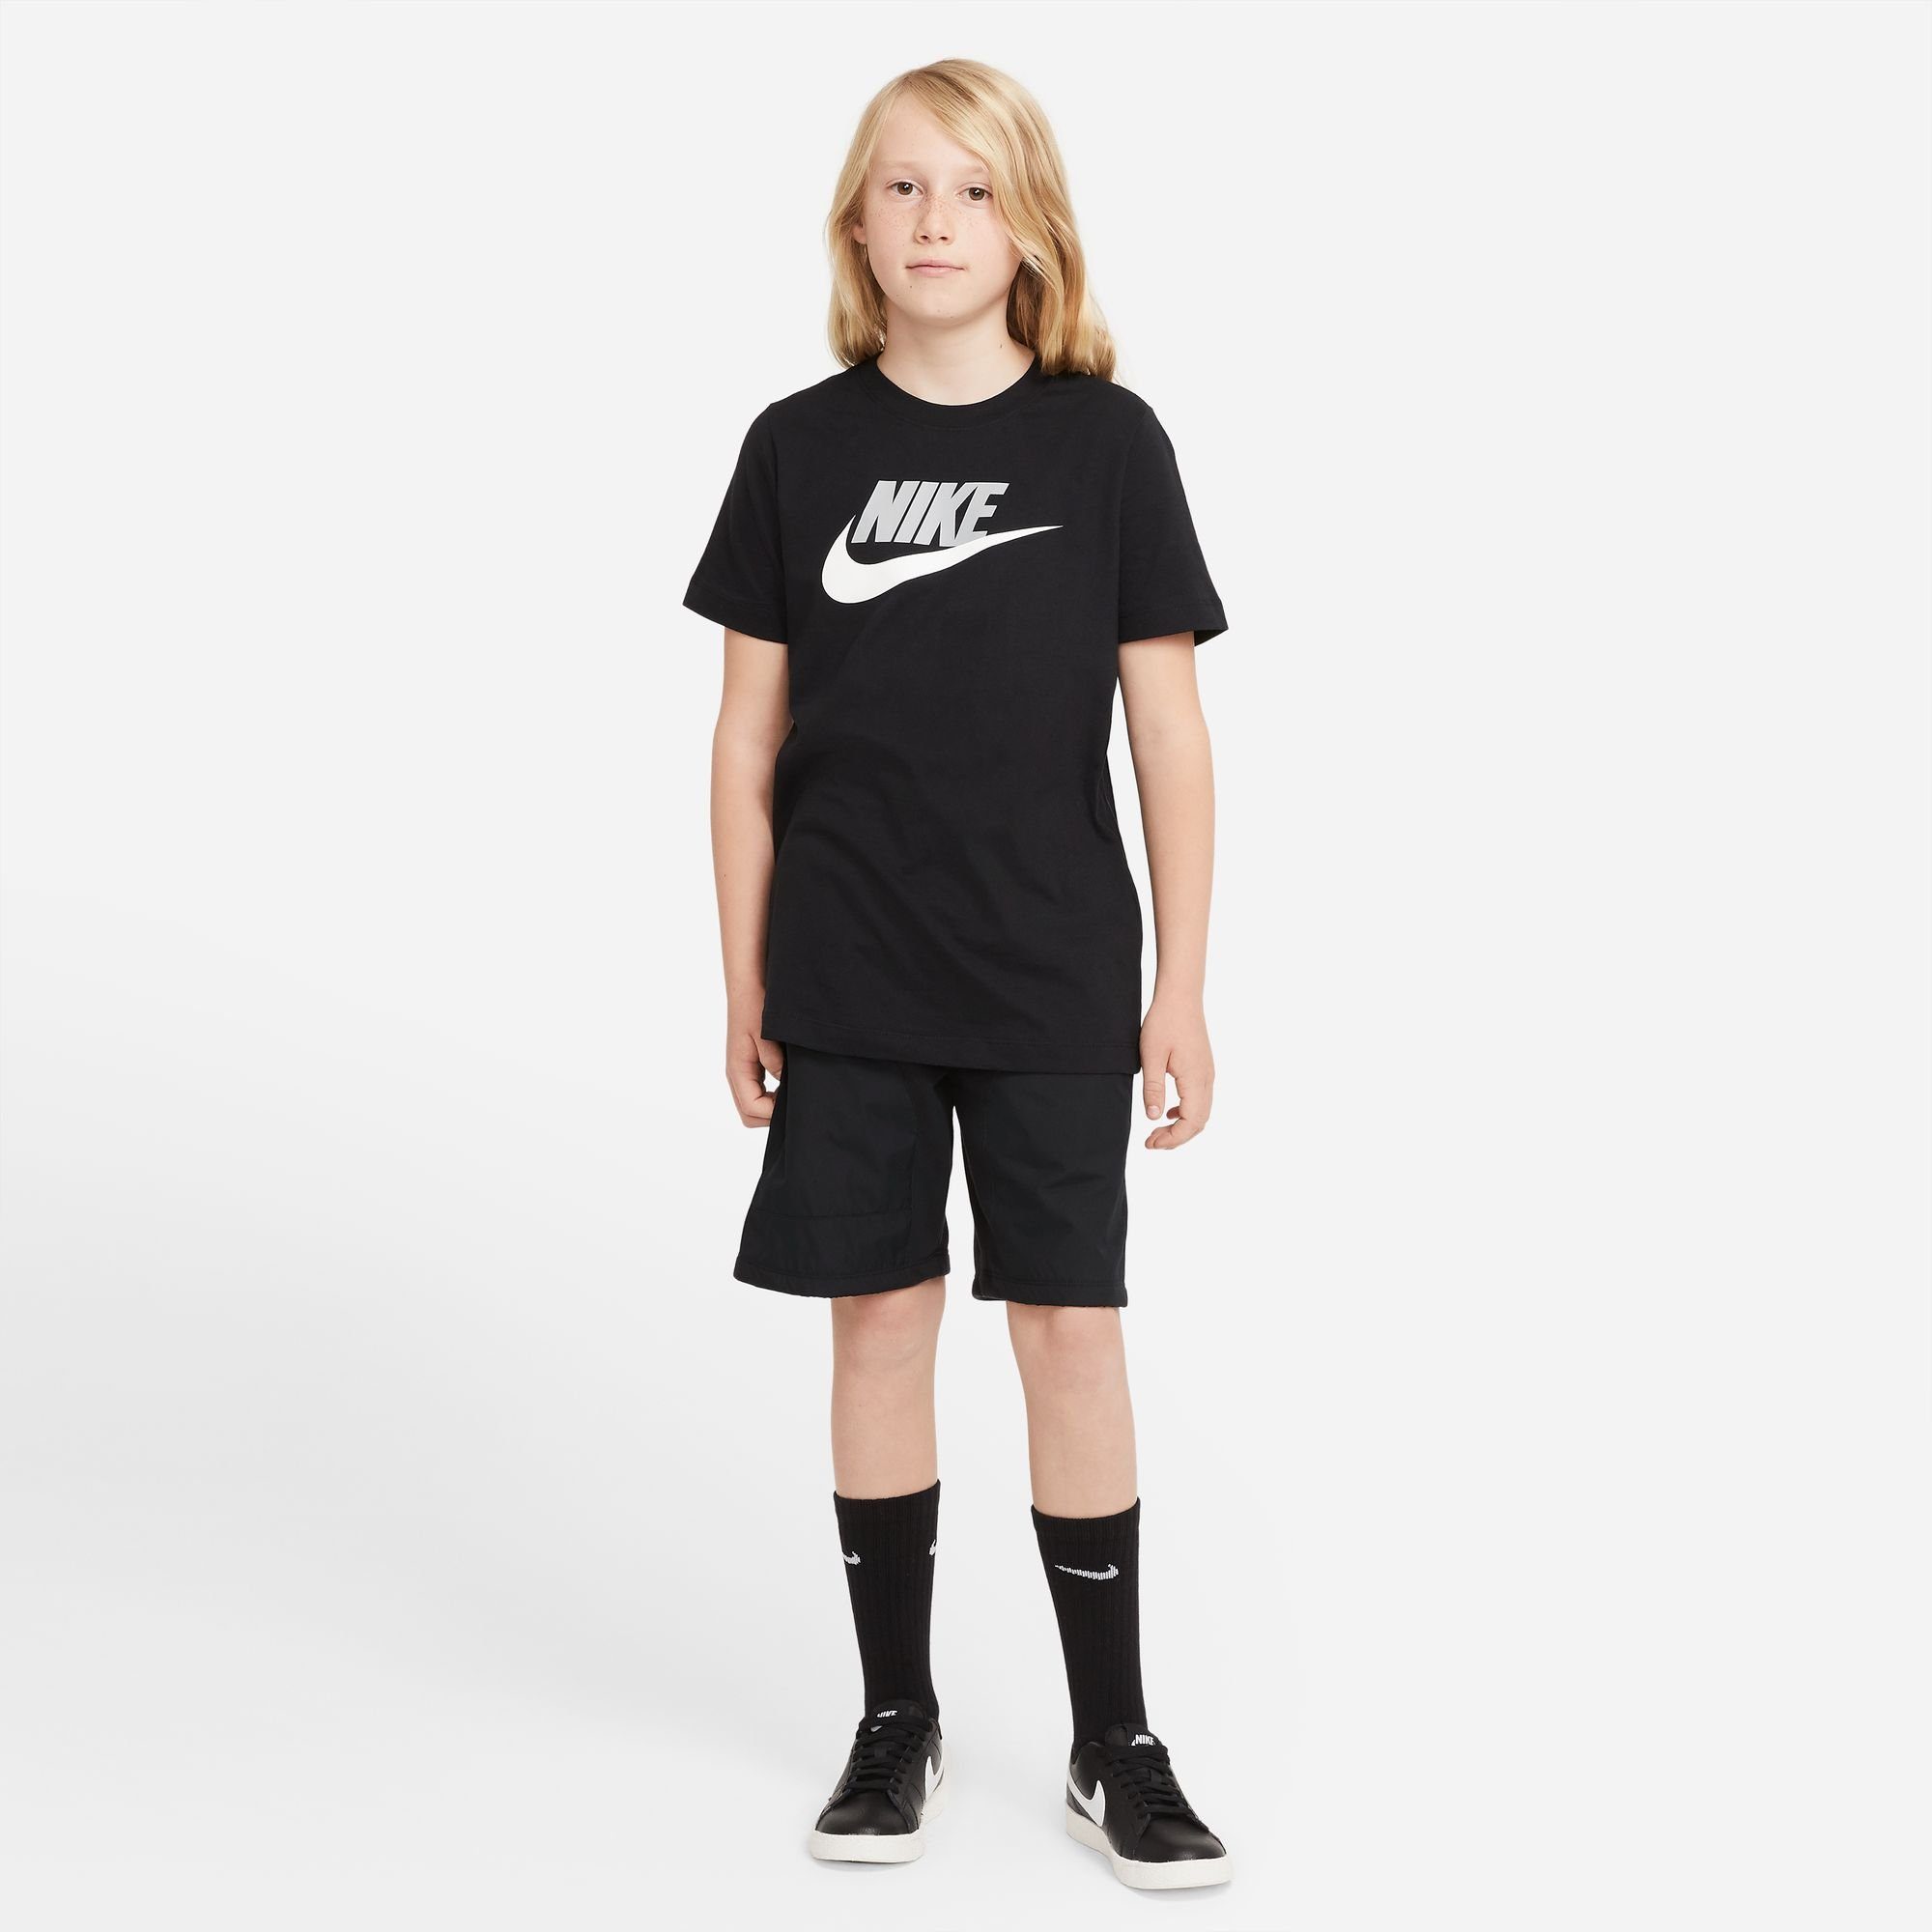 KIDS' Sportswear T-SHIRT schwarz-grau-weiß T-Shirt COTTON Nike BIG